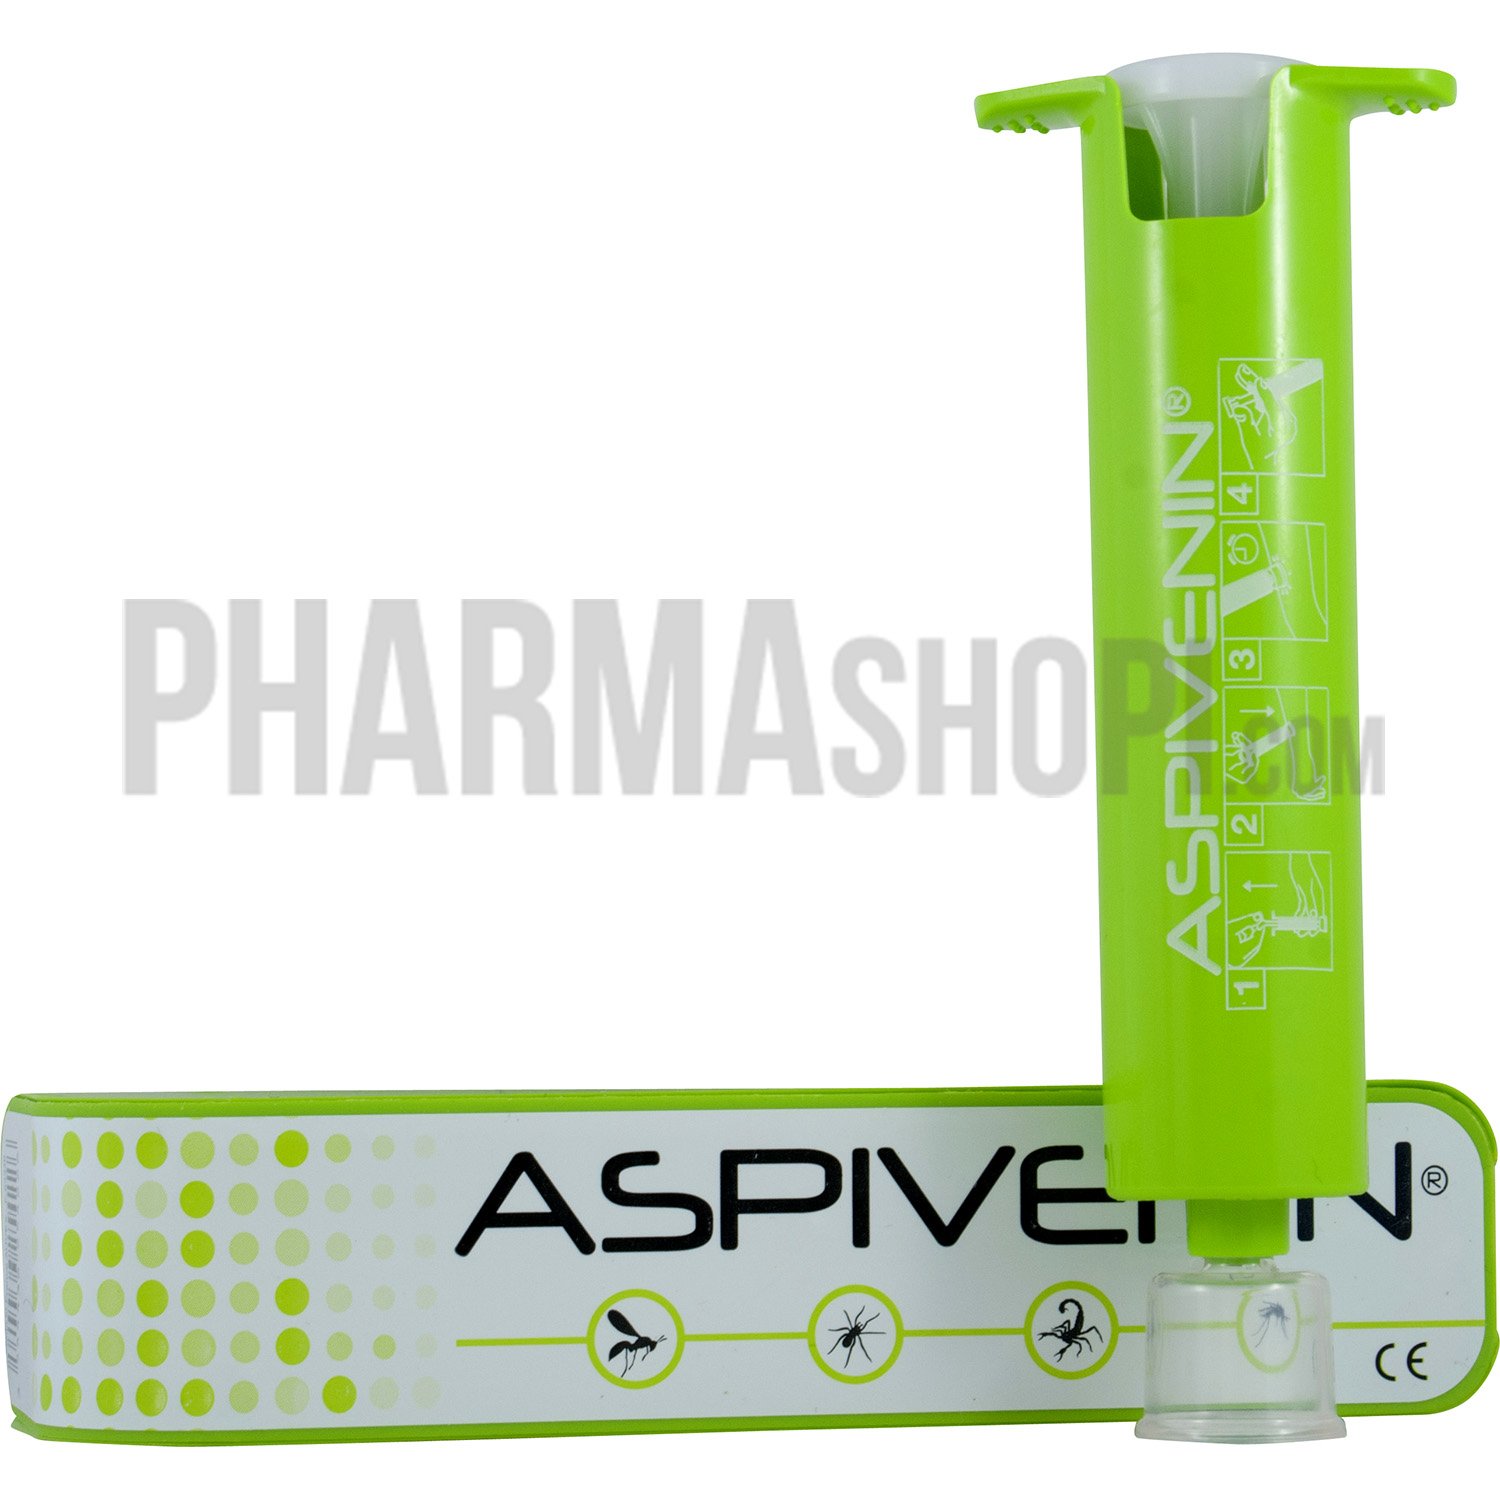 Aspivenin geste d'urgence anti-venin - kit d'une pompe